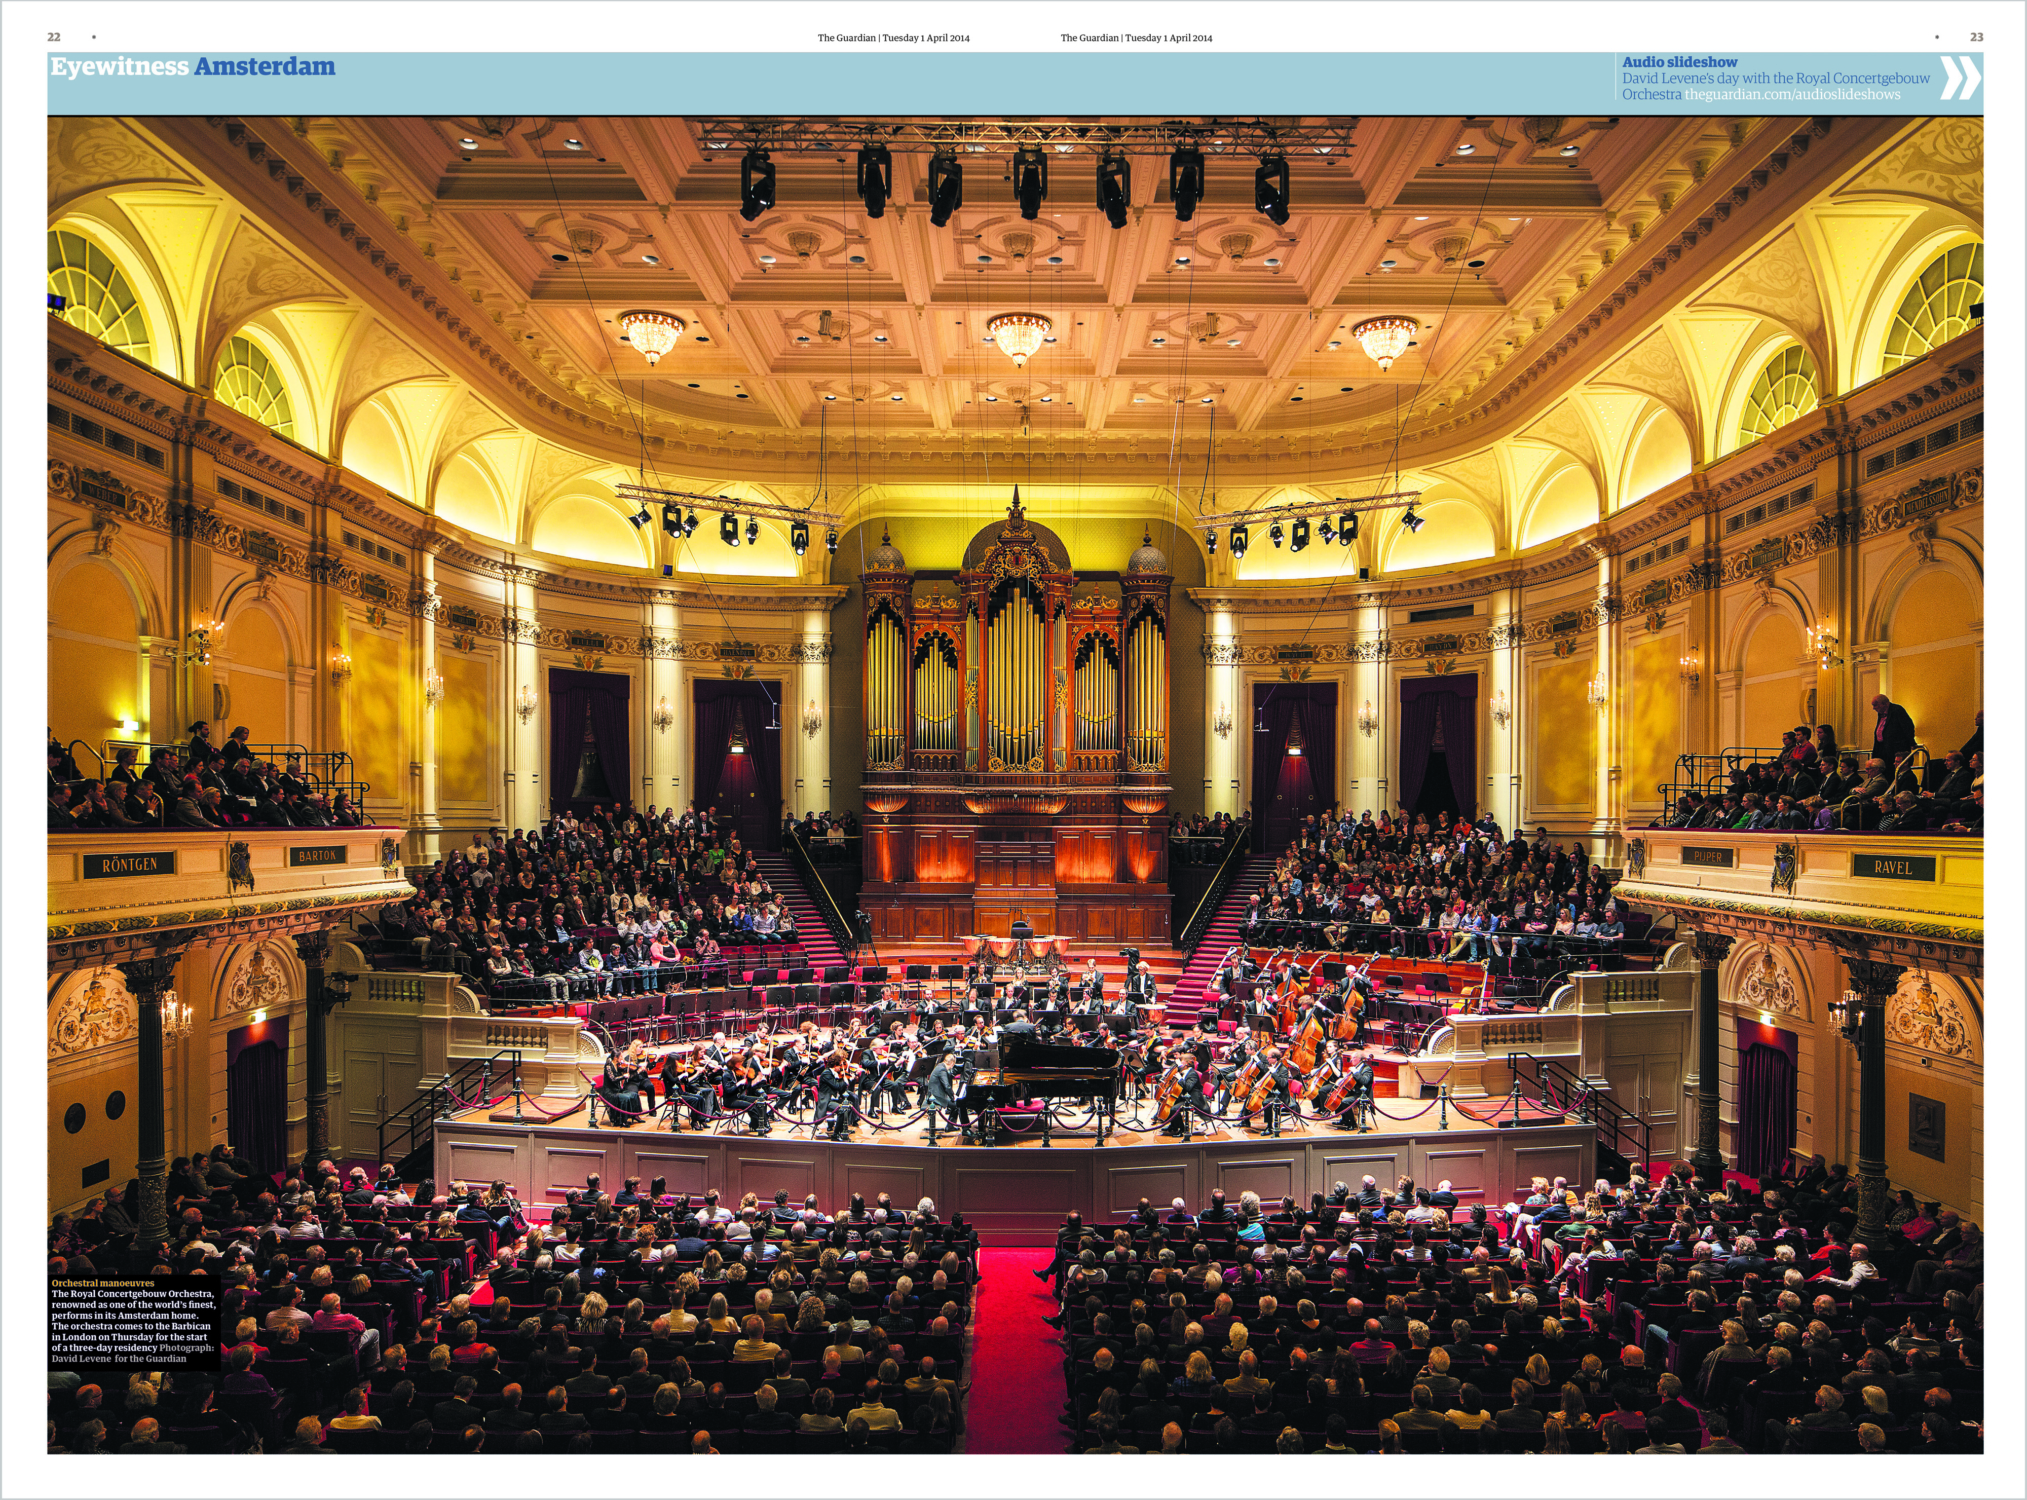 The Royal Concertgebouw Orchestra, David Levene Photography